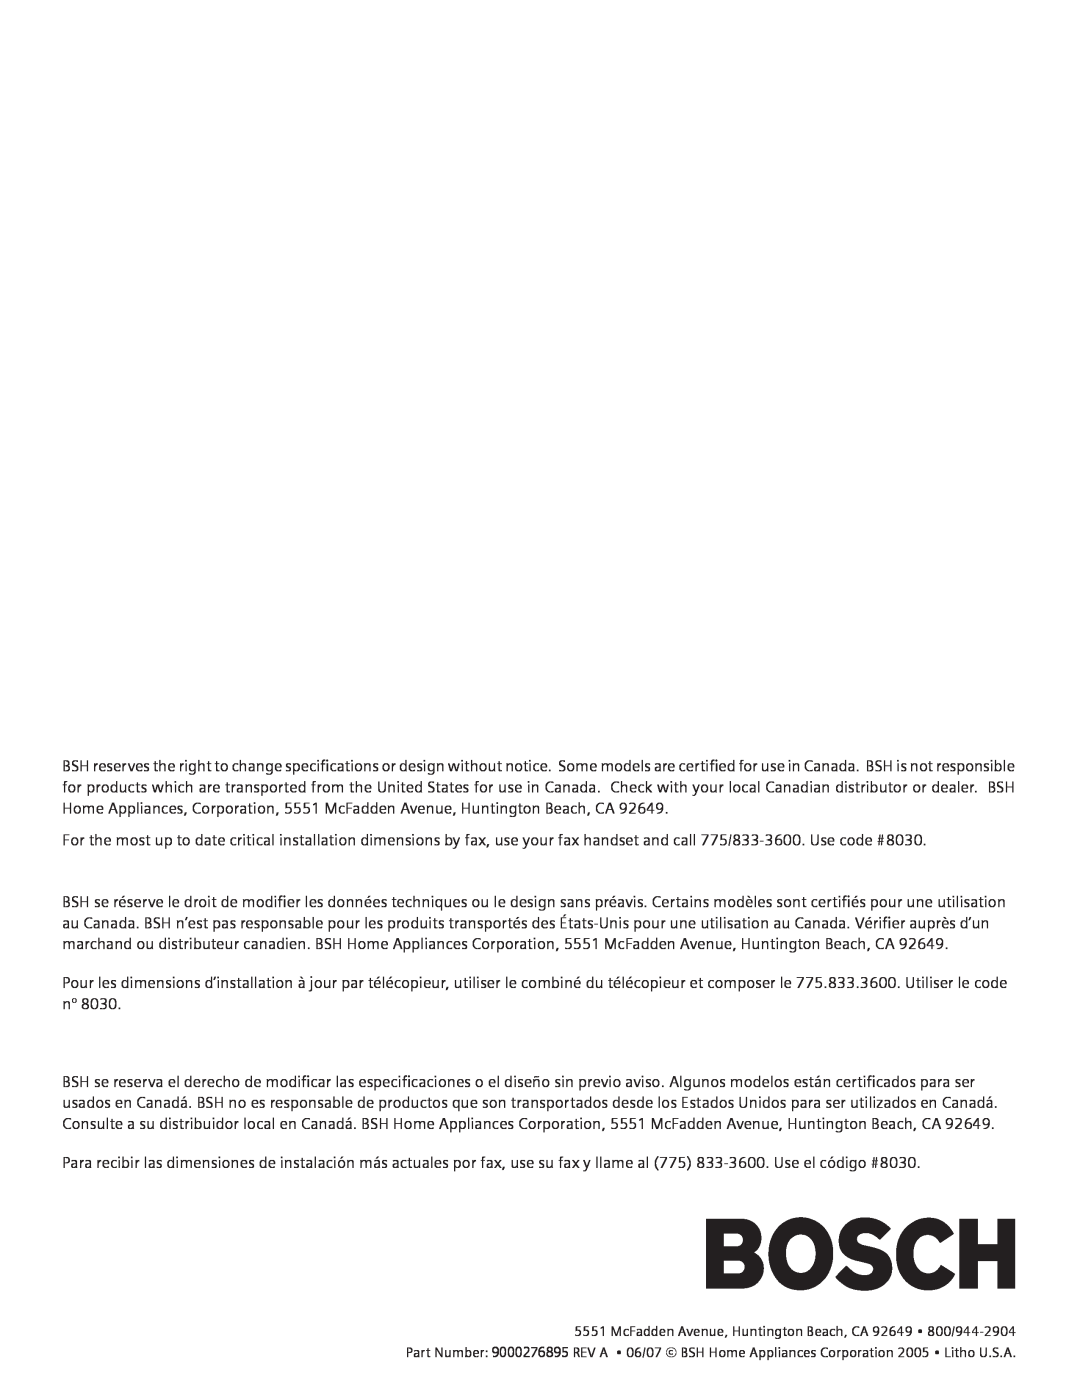 Bosch Appliances sHX33M, sHe42l, sHX43C manual McFadden Avenue, Huntington Beach, CA 92649 800/944-2904 